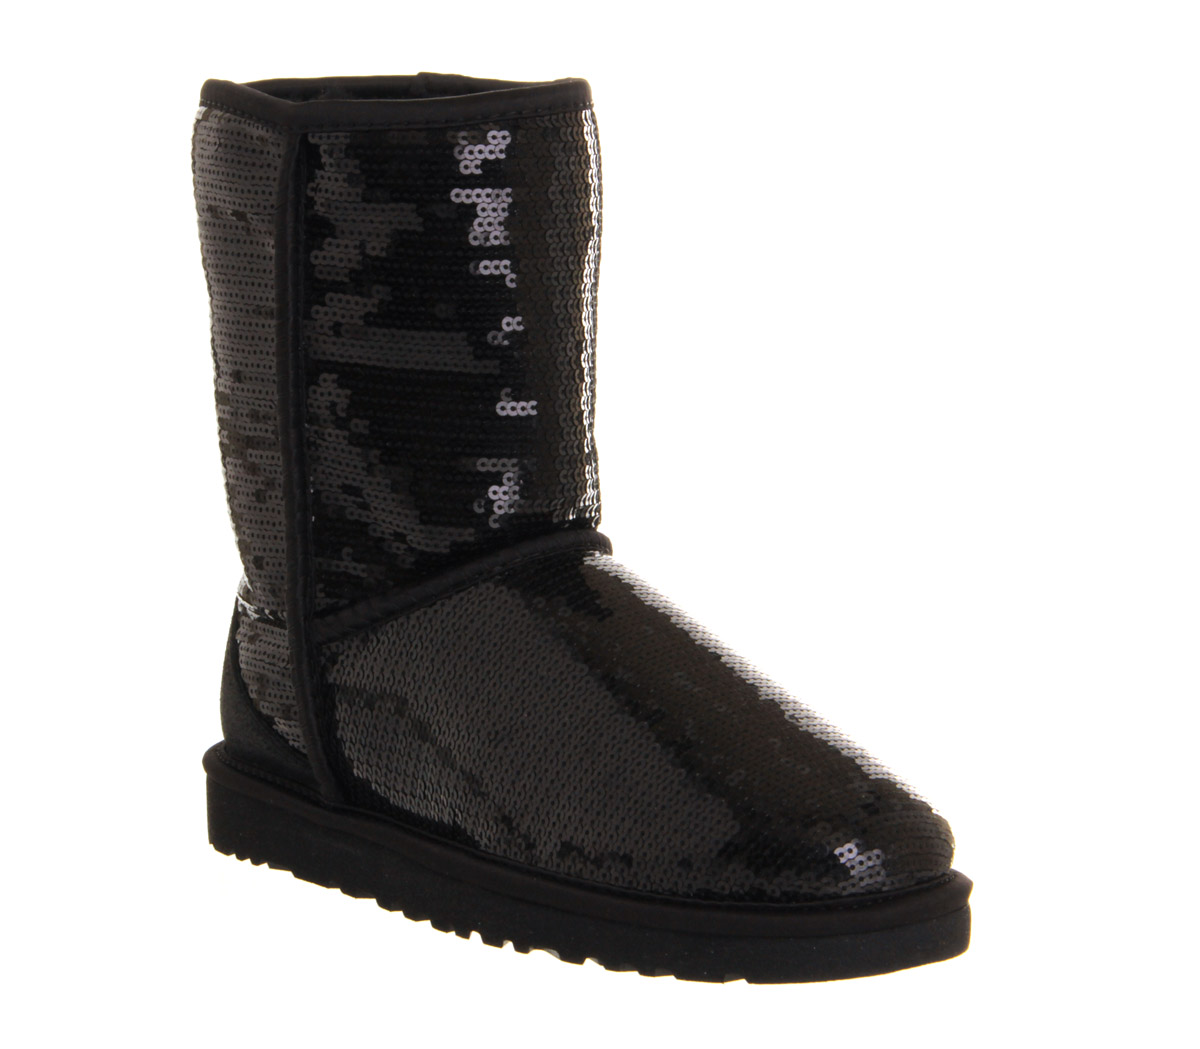 ugg boots sequin black